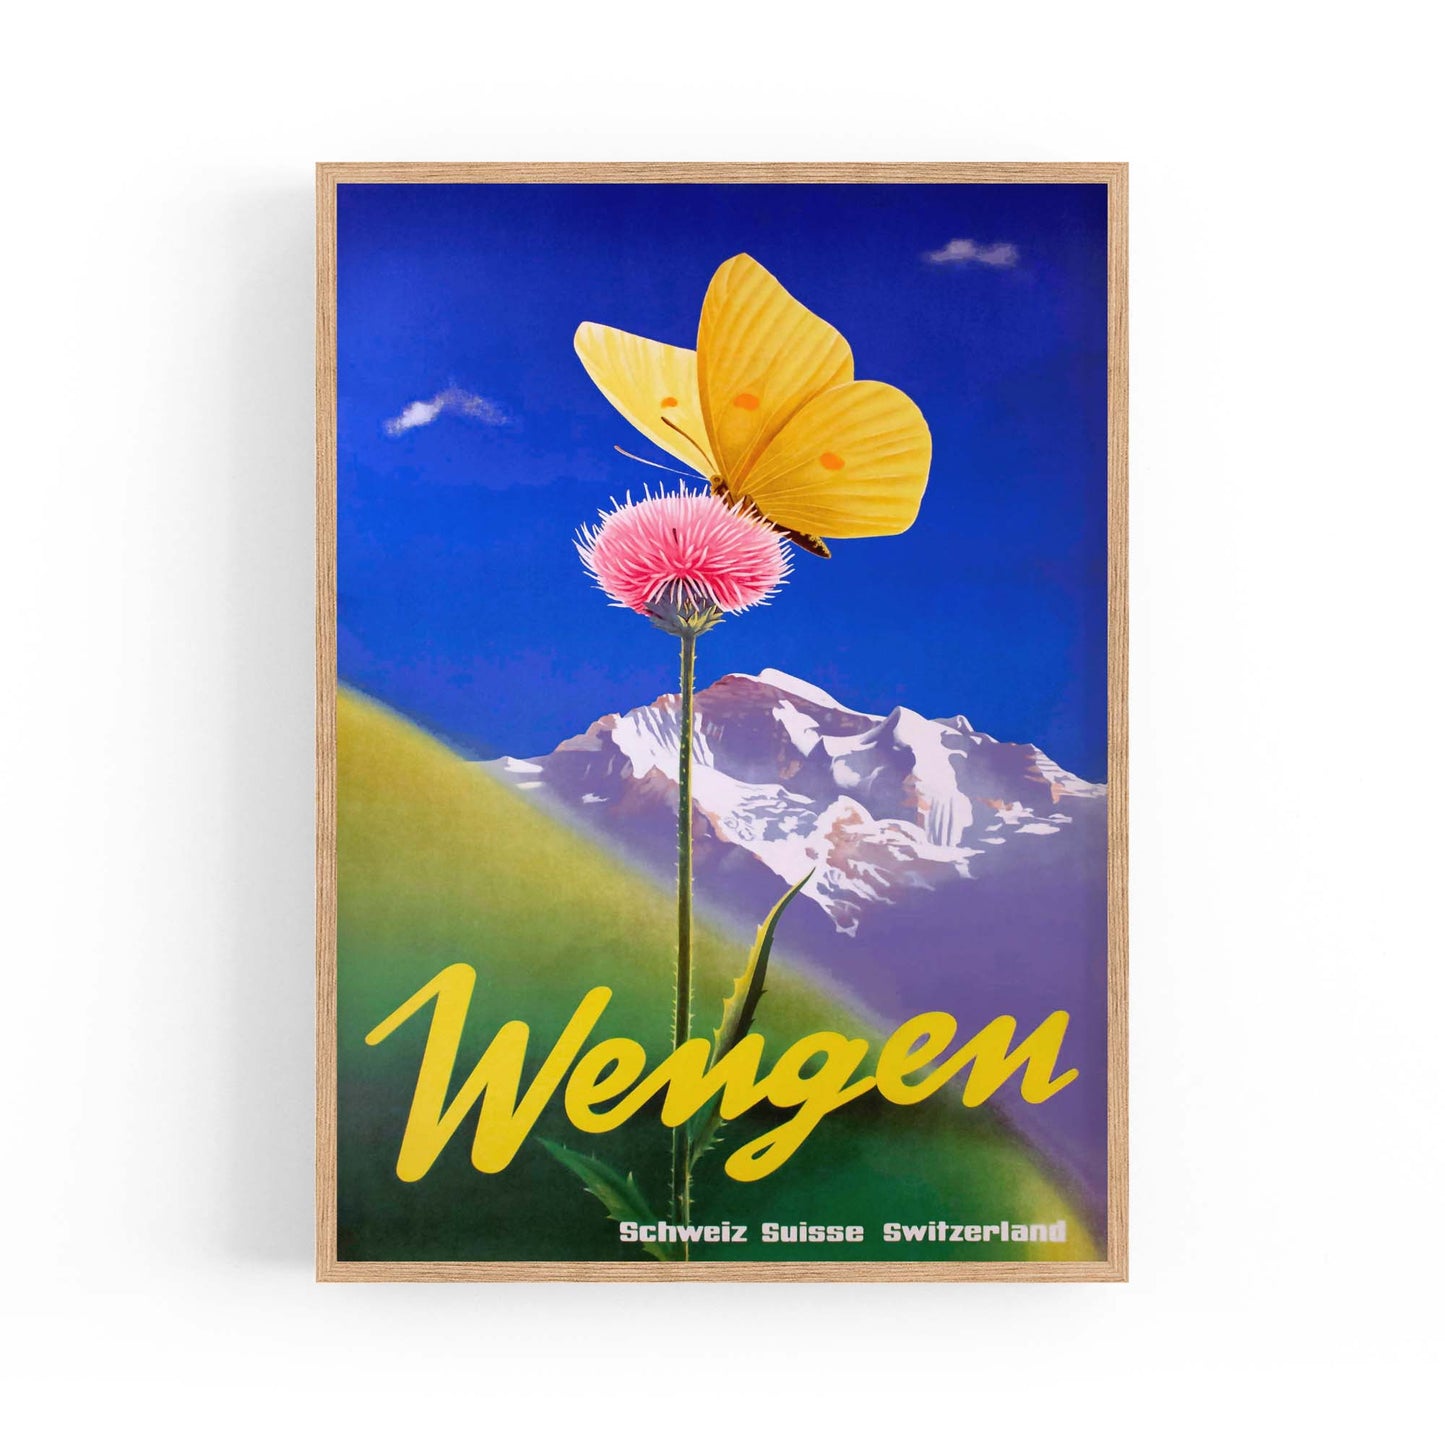 Wengen Switzerland Vintage Travel Advert Wall Art - The Affordable Art Company